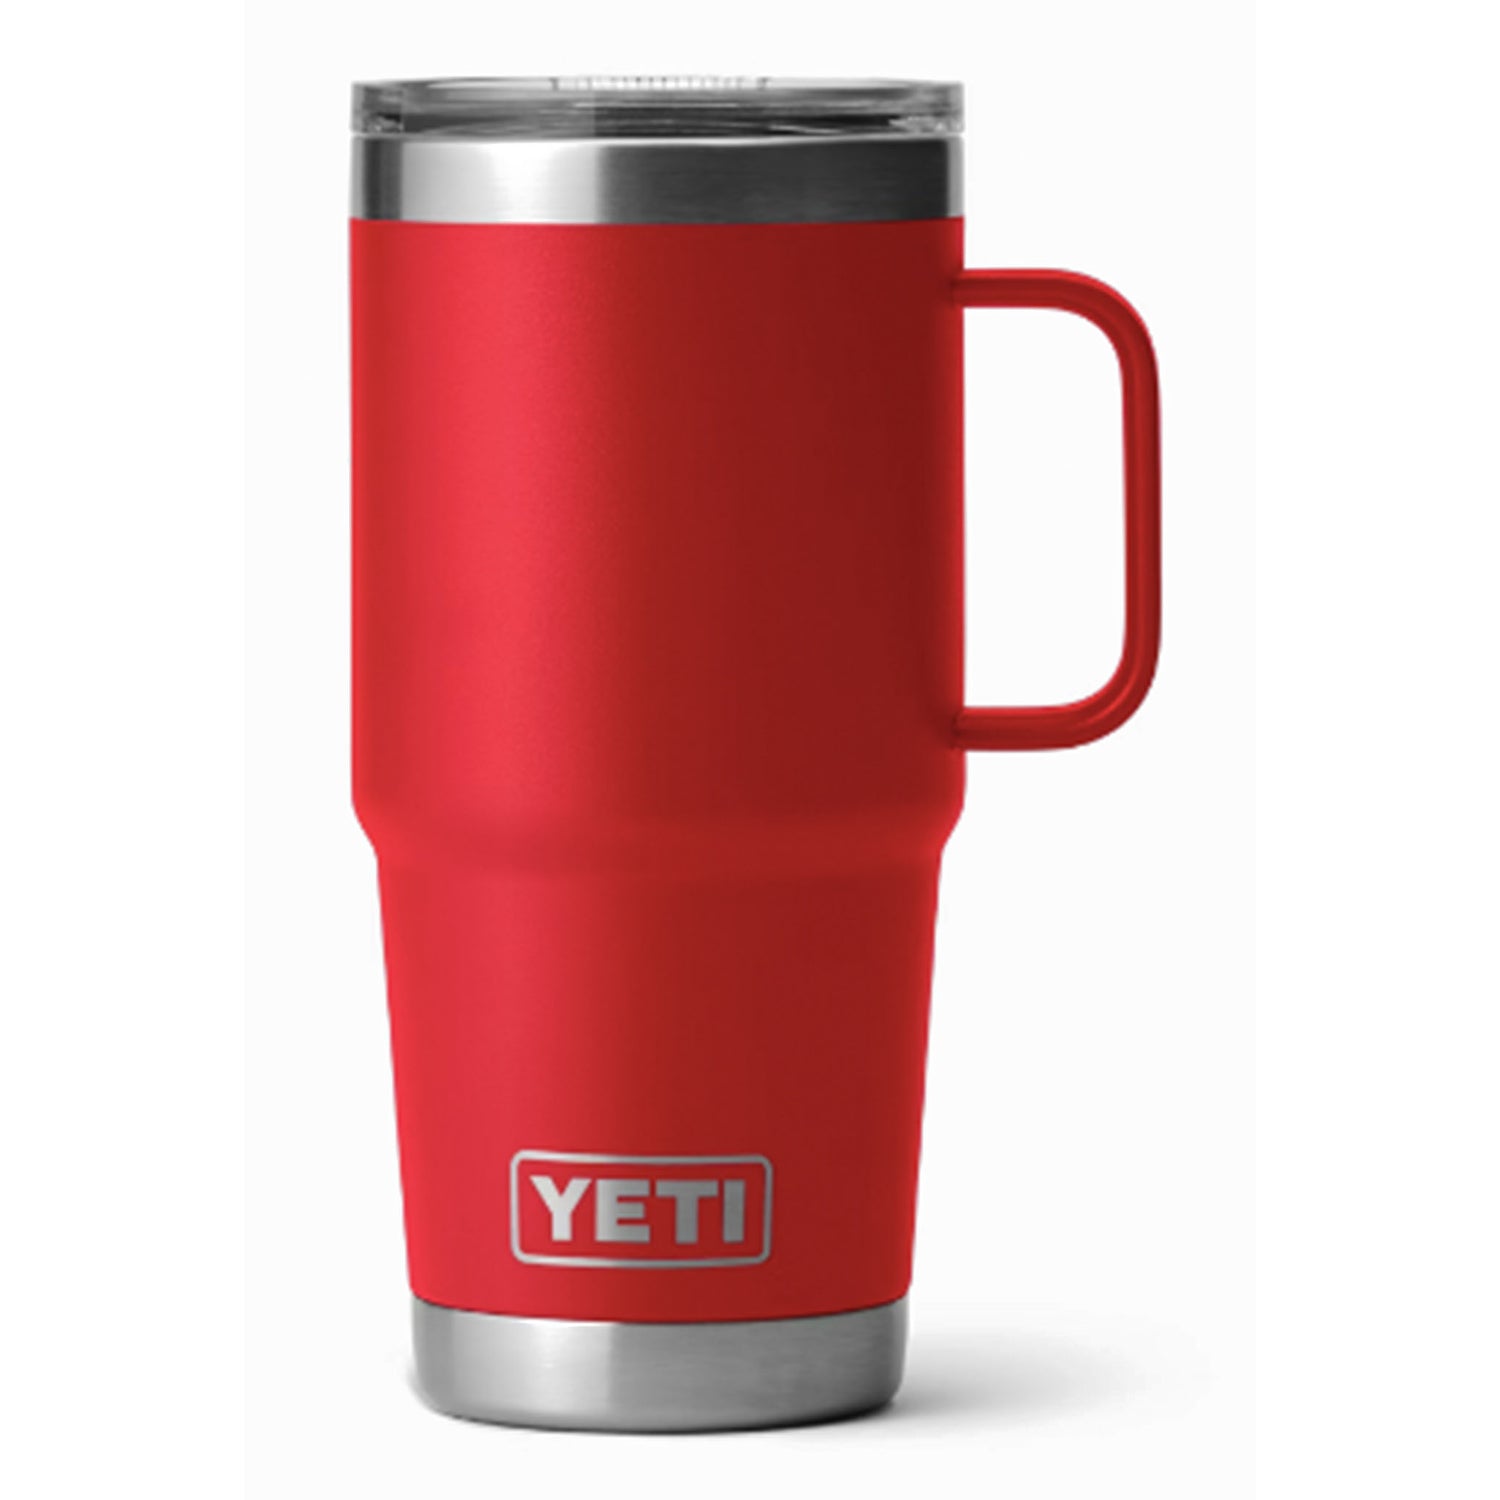 Yeti Rescue Red 20 oz Travel Mug